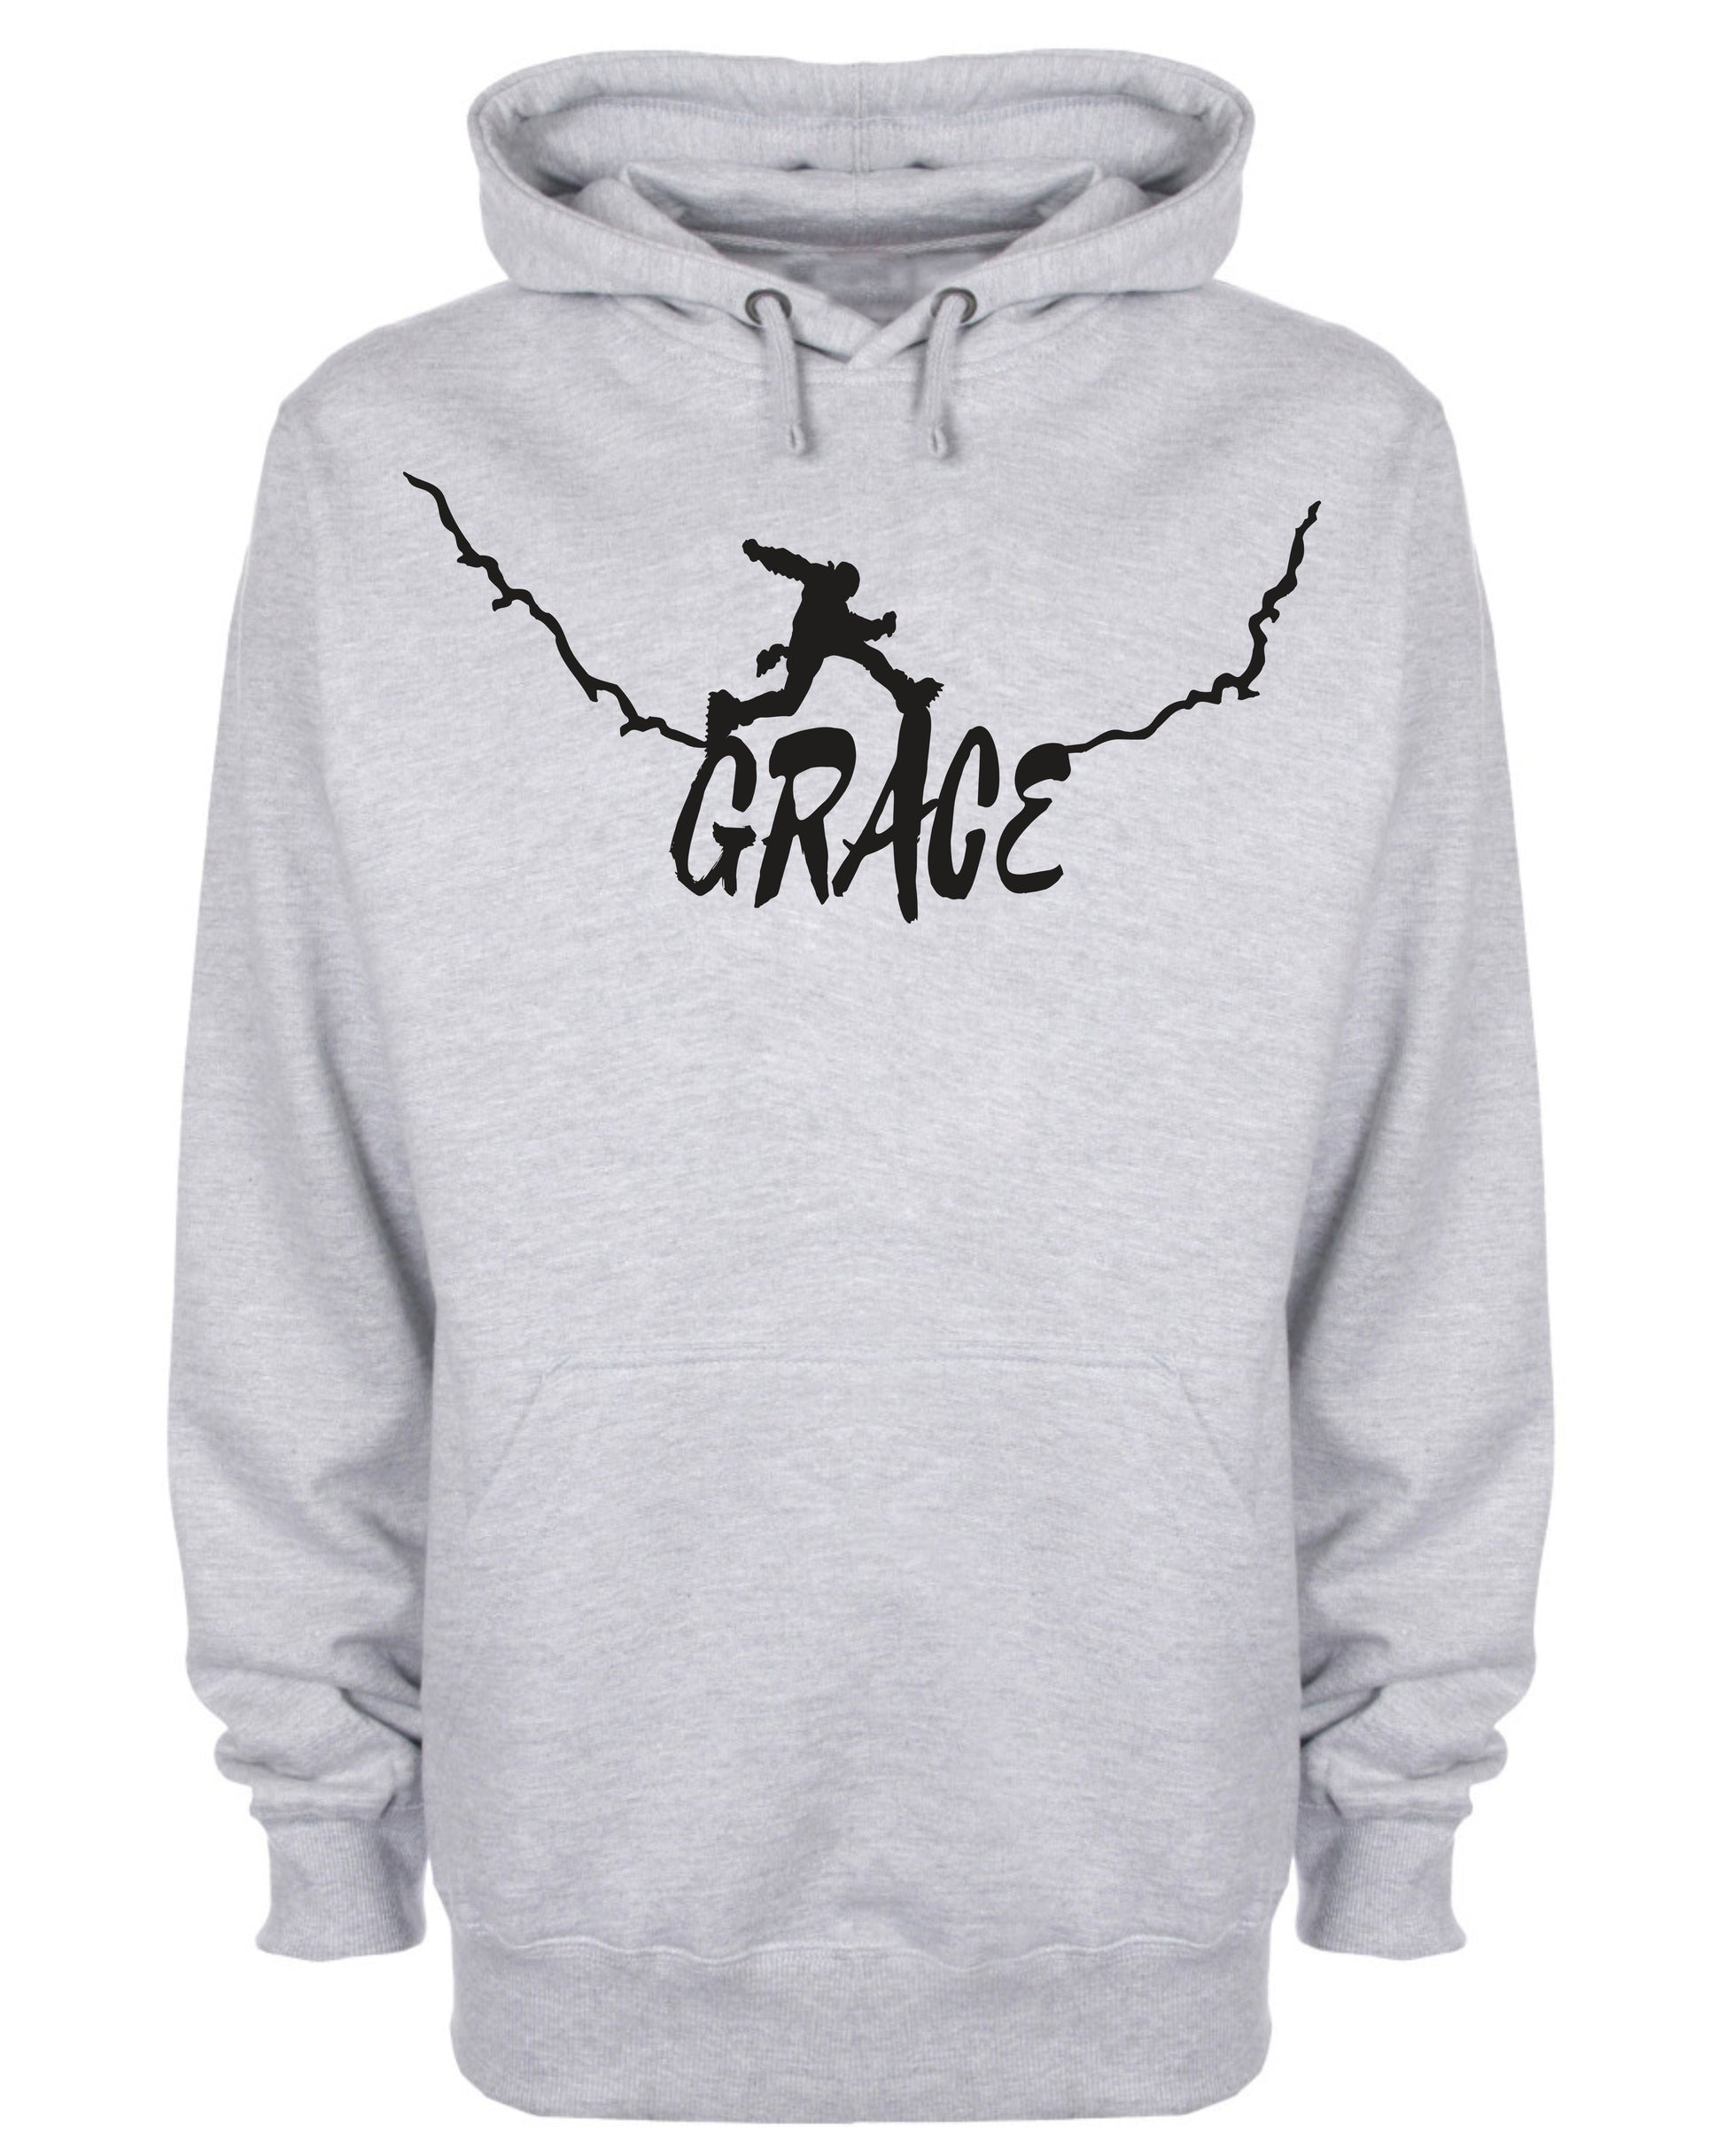 Grace Hoodie Christian Jesus Christ Sweatshirt